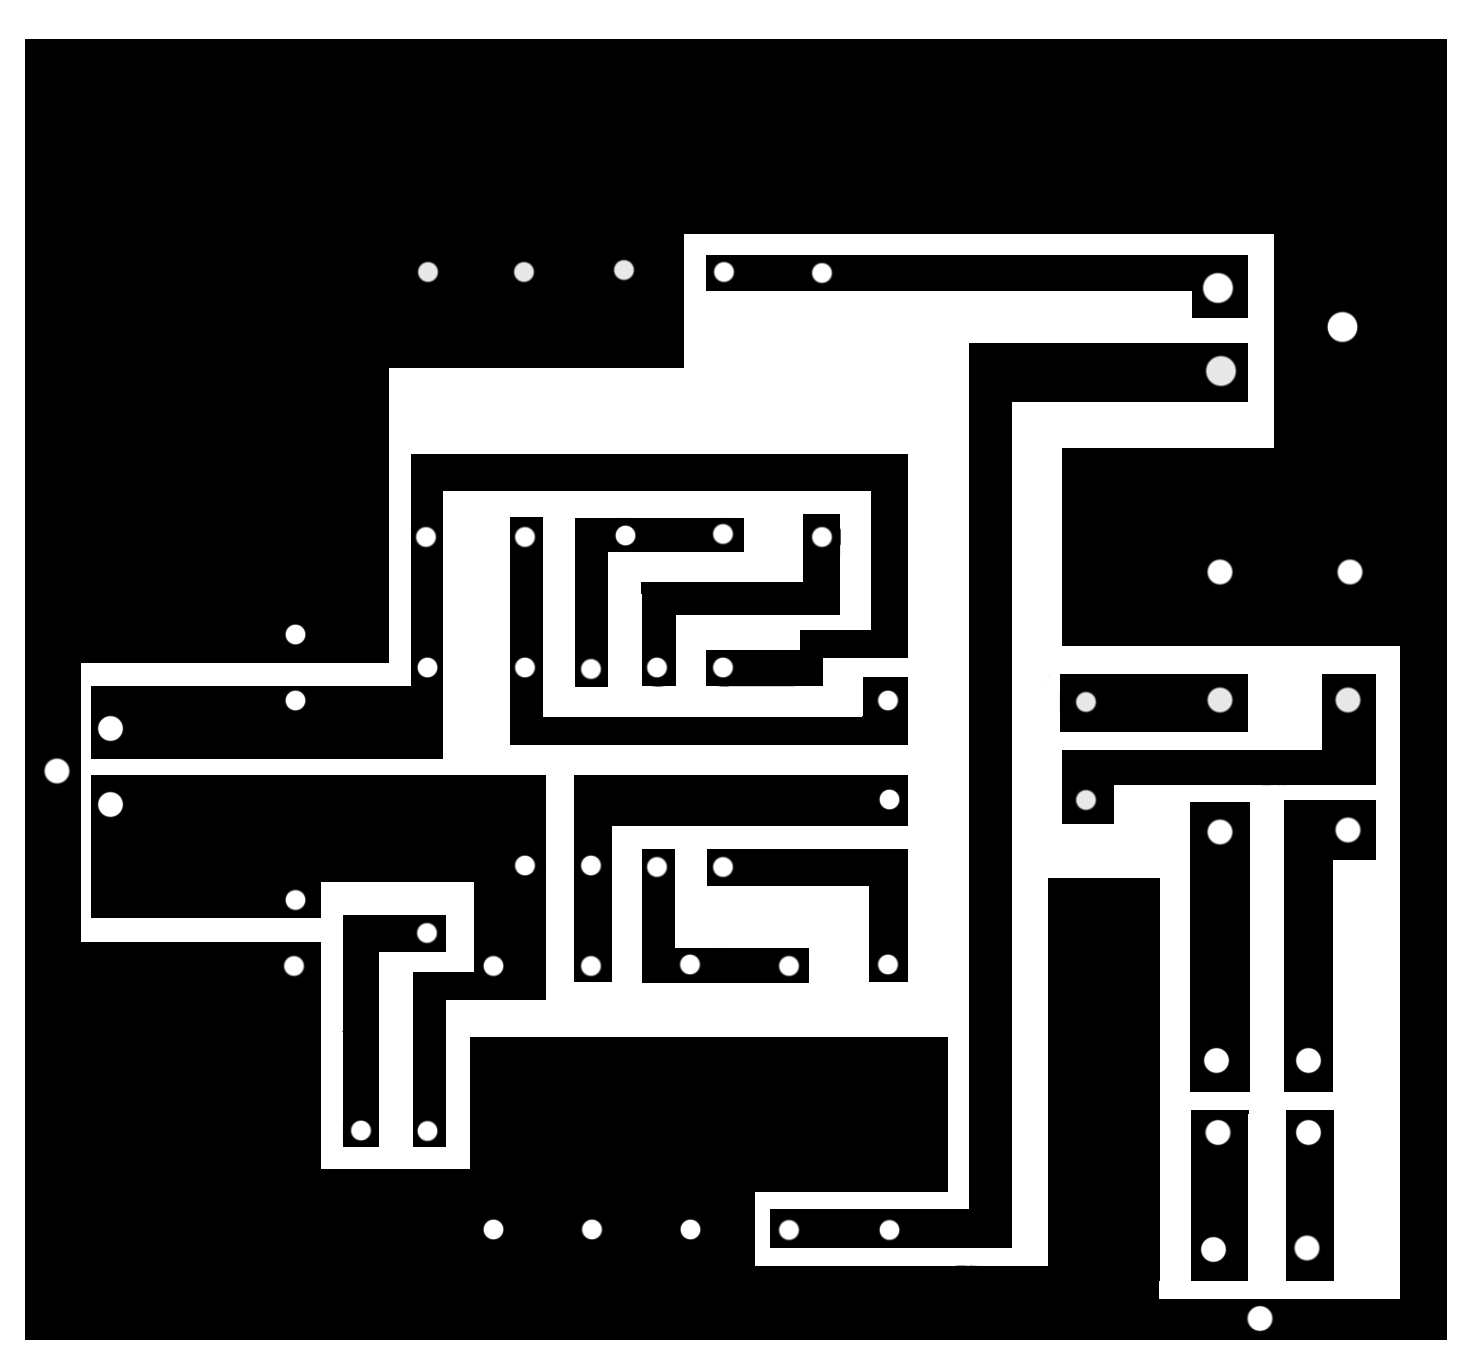 Stereo preamplifier circuit diagram